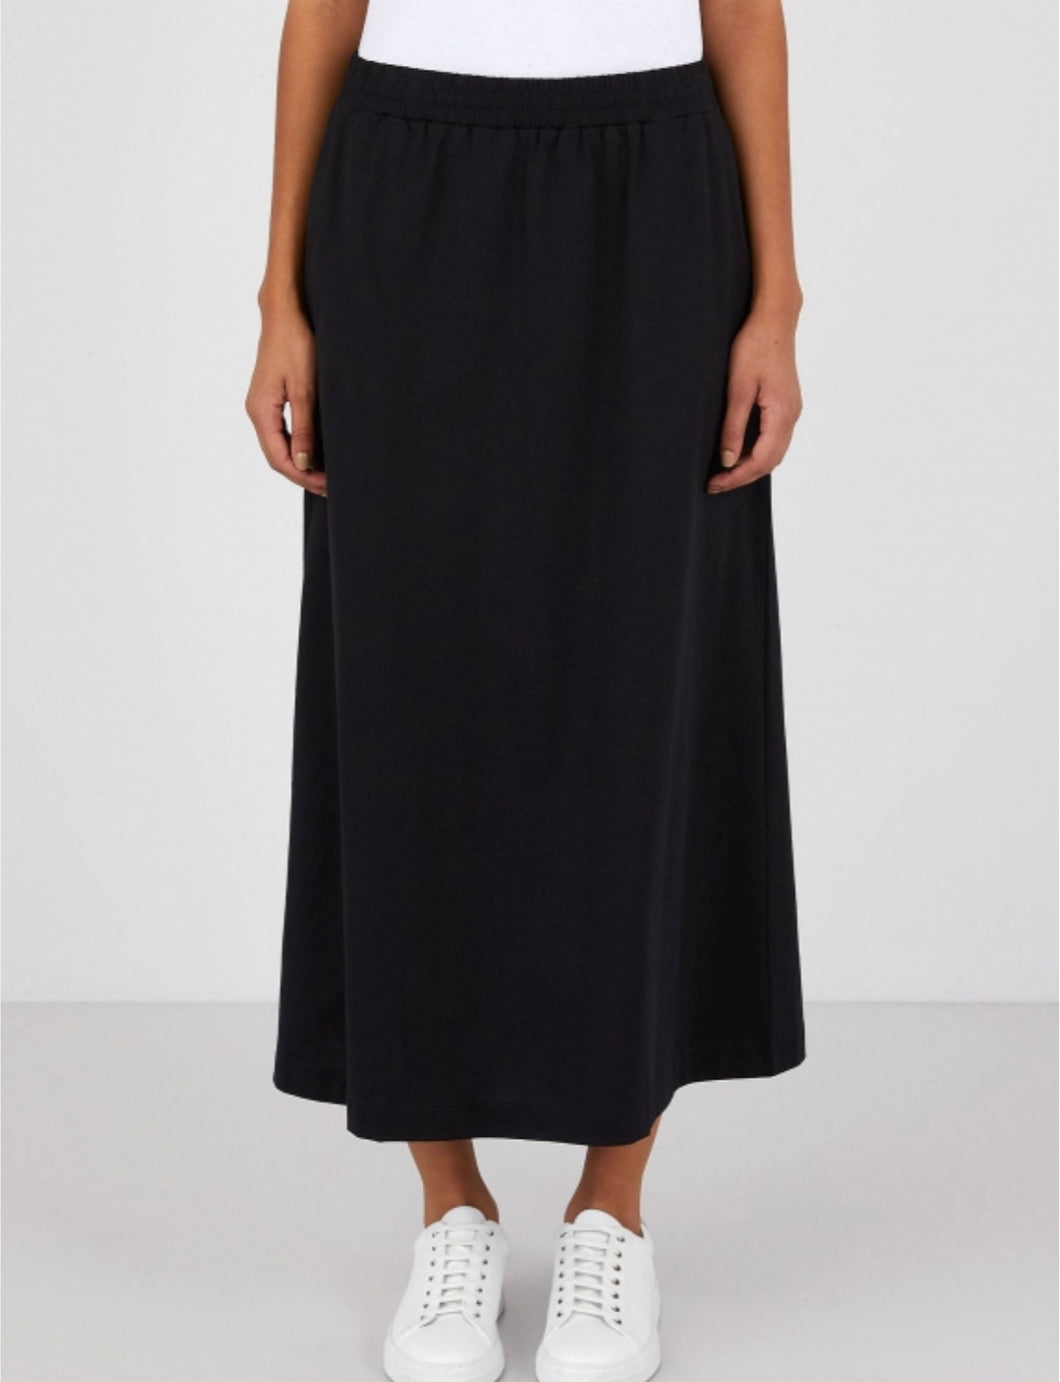 Sunspel Black Drawstring Skirt